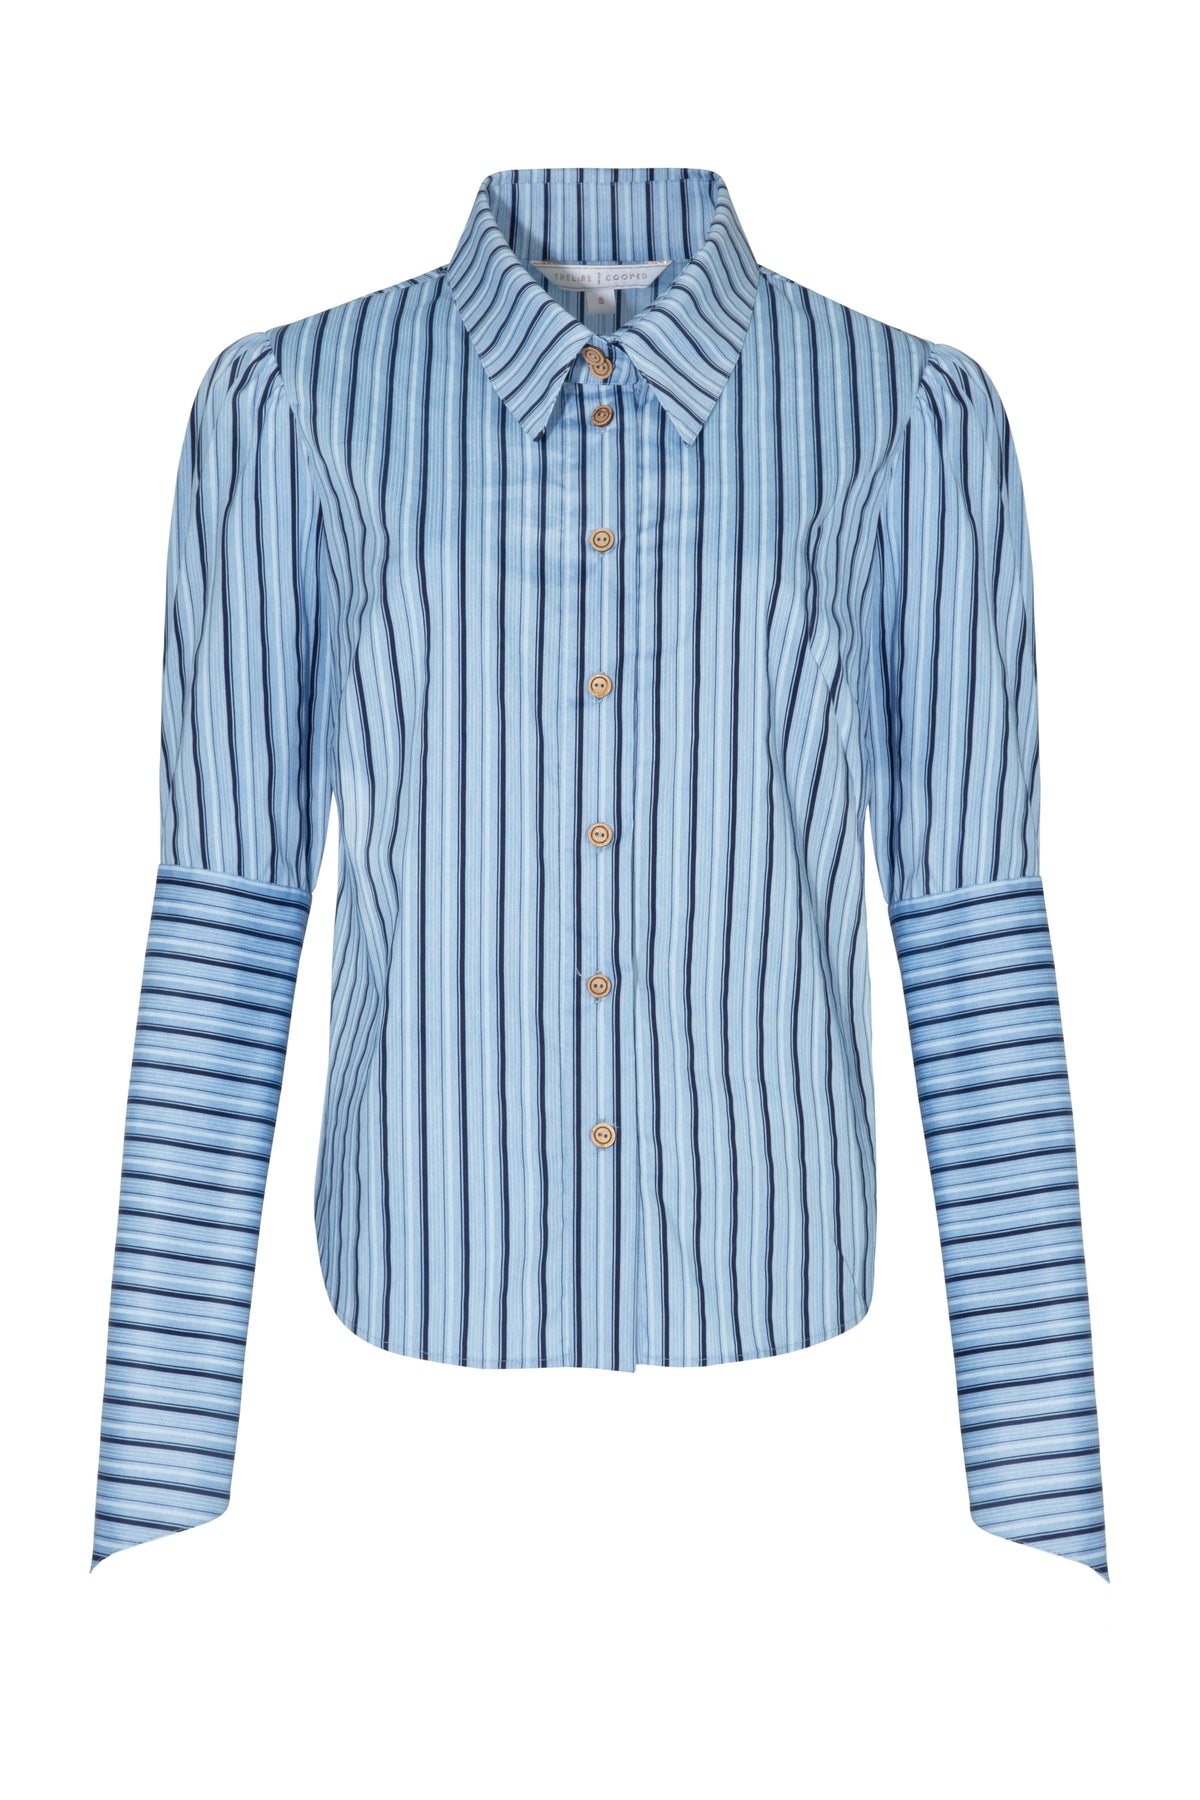 Trelise Cooper Roman Holiday Shirt Blue Stripe